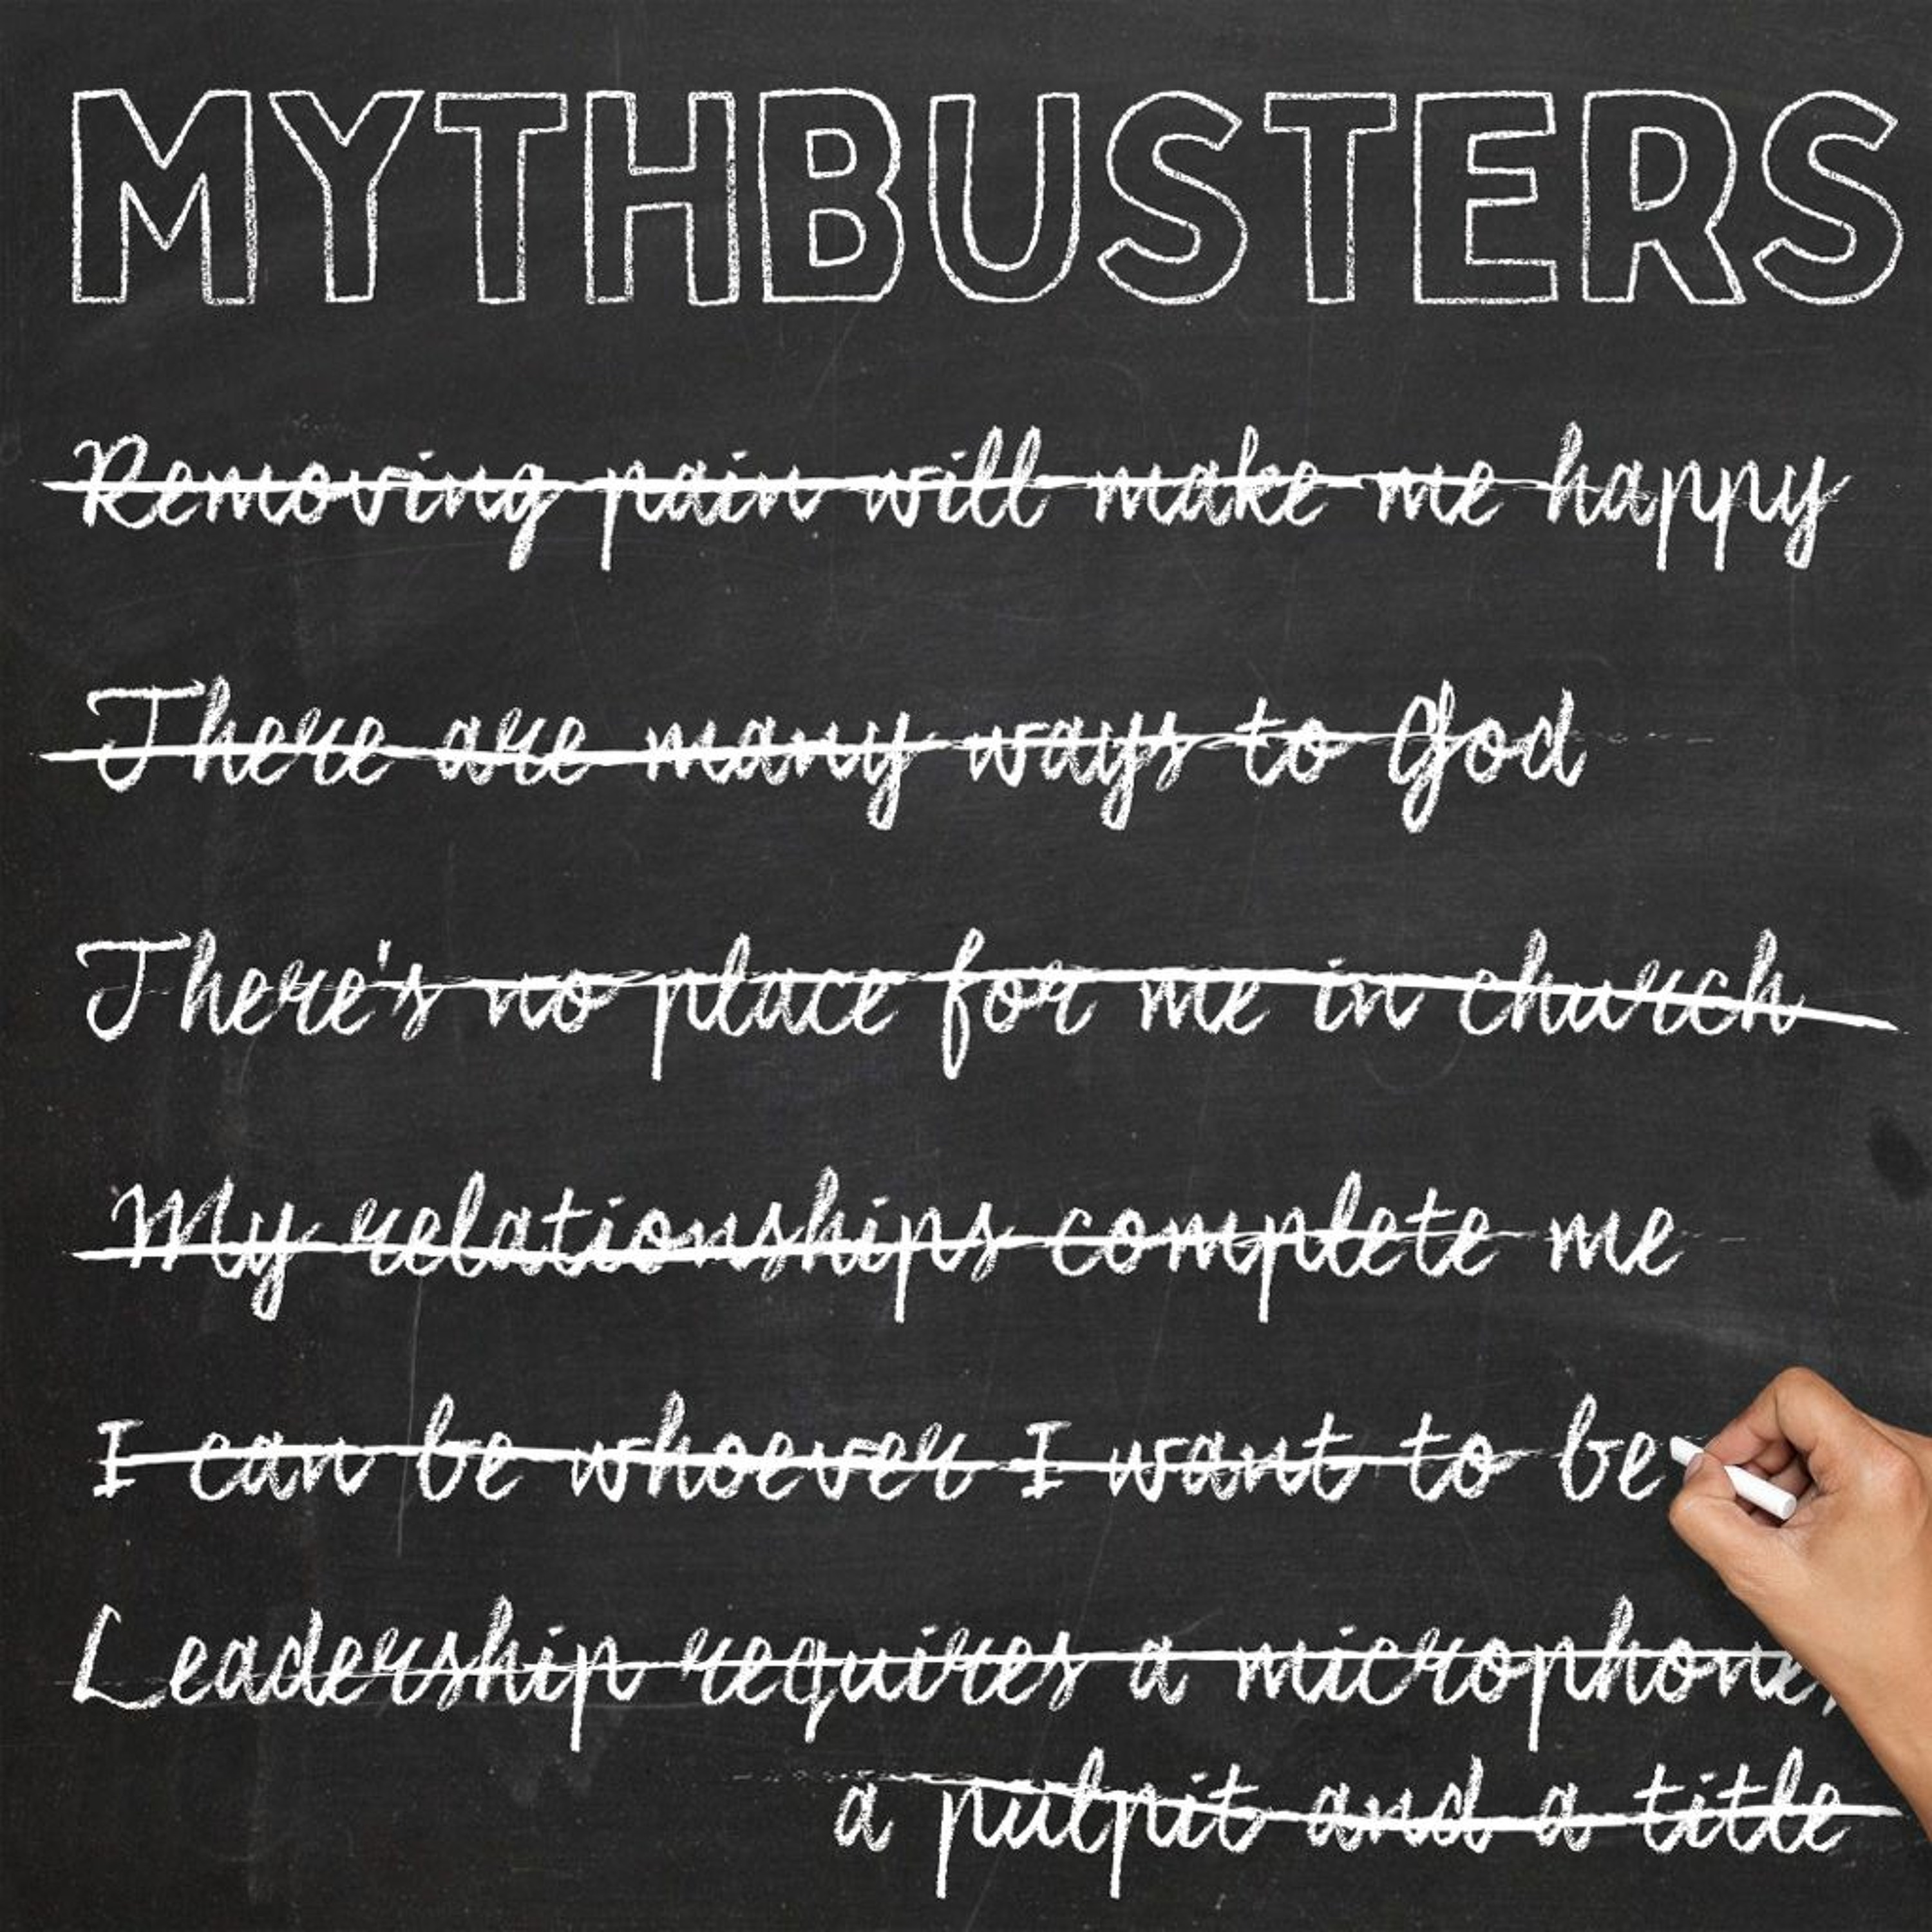 Mythbuster 4 Relationship - Jen Harding - 2020.02.02